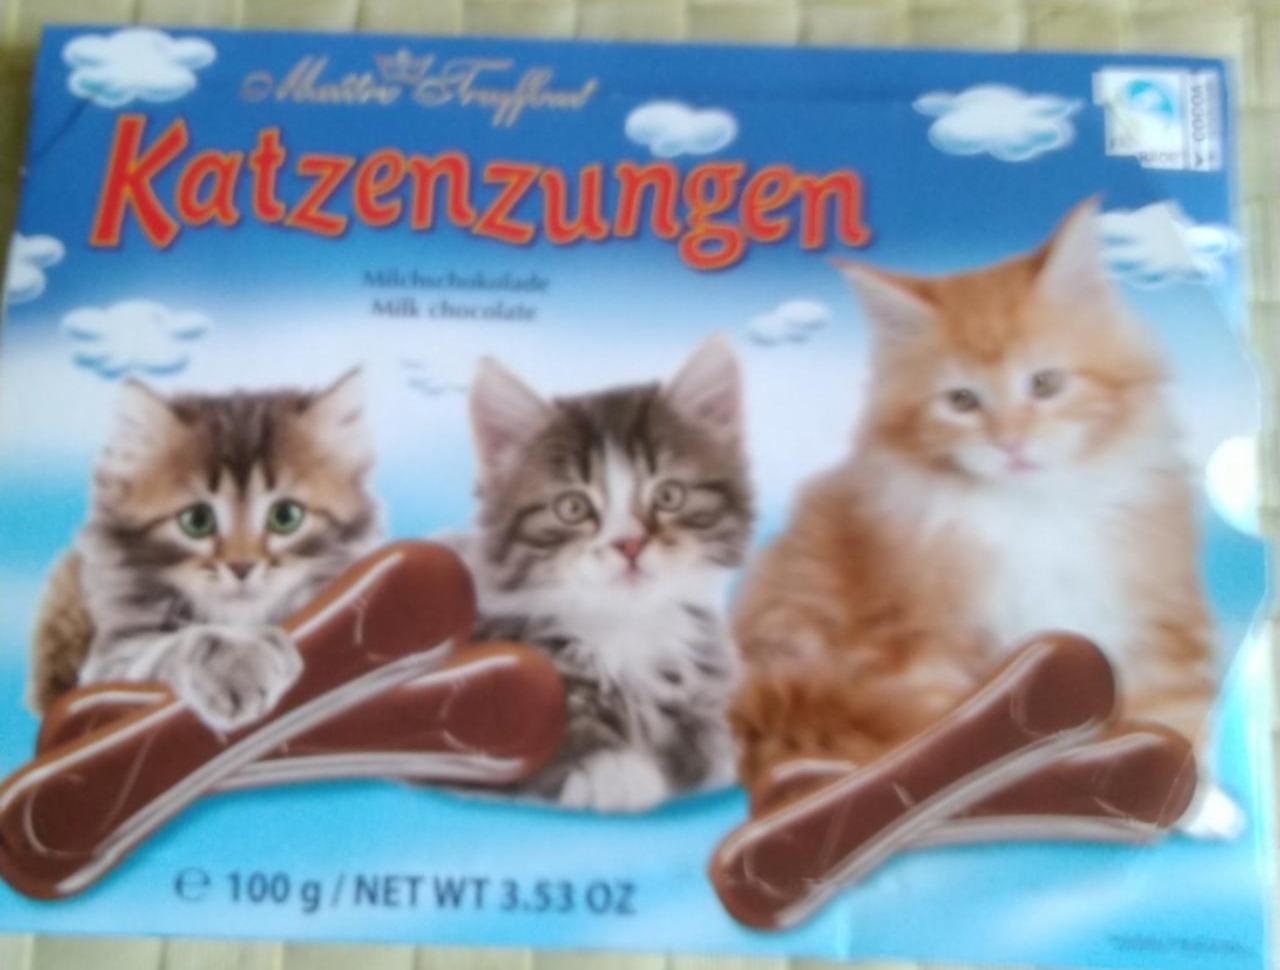 Zdjęcia - Katzenzungen Milk chocolate Maître Truffout